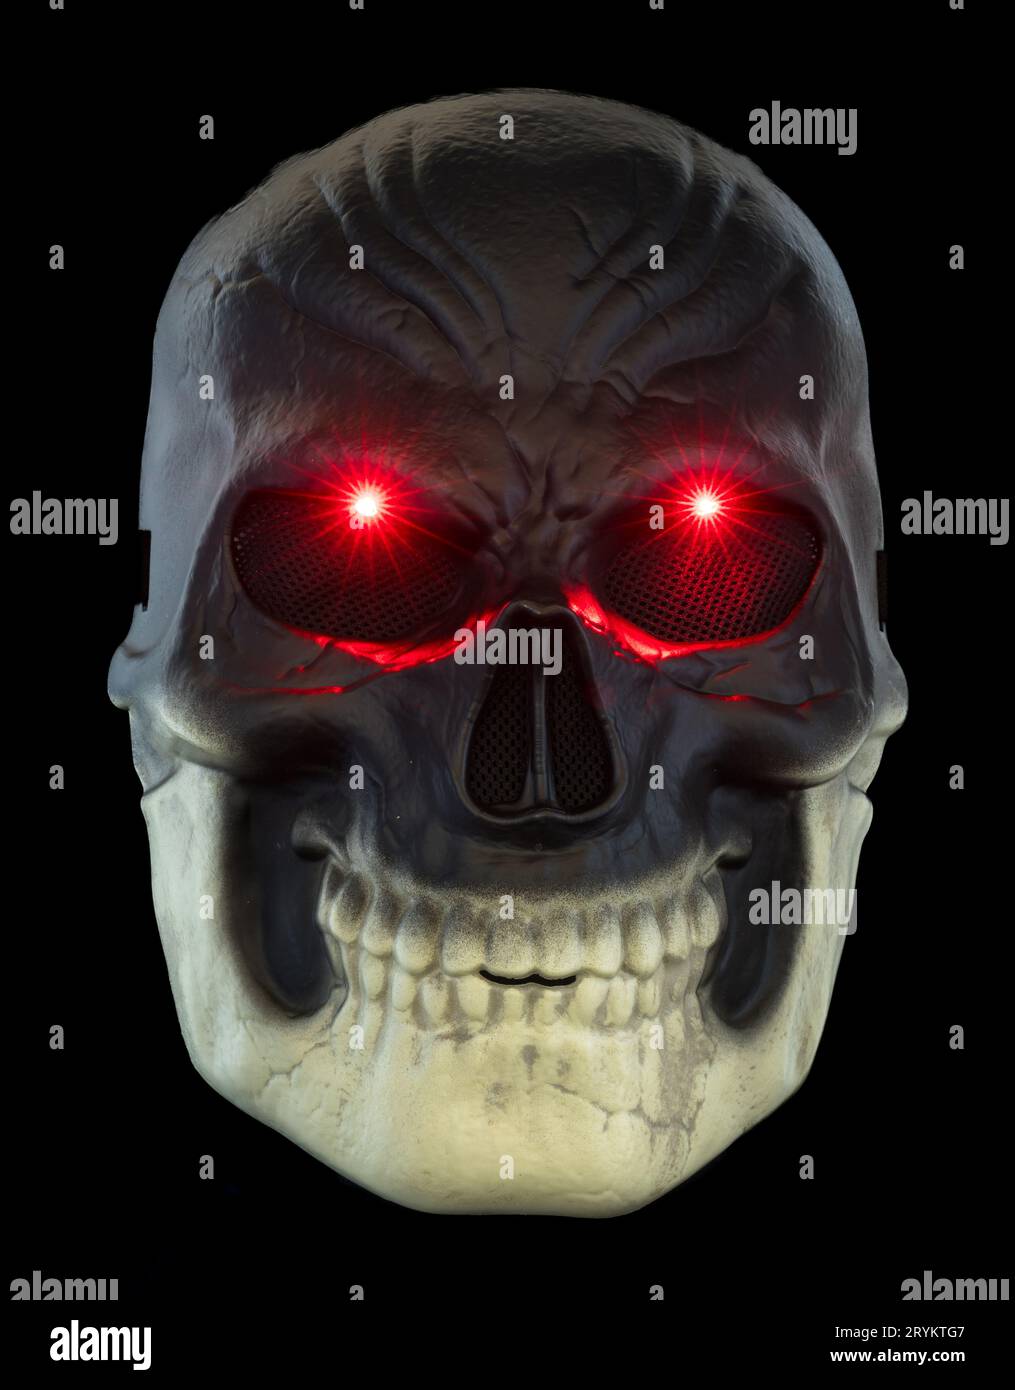 Maschera Skeleton Dark Light-up con occhi luminosi rossi isolati sul nero Foto Stock